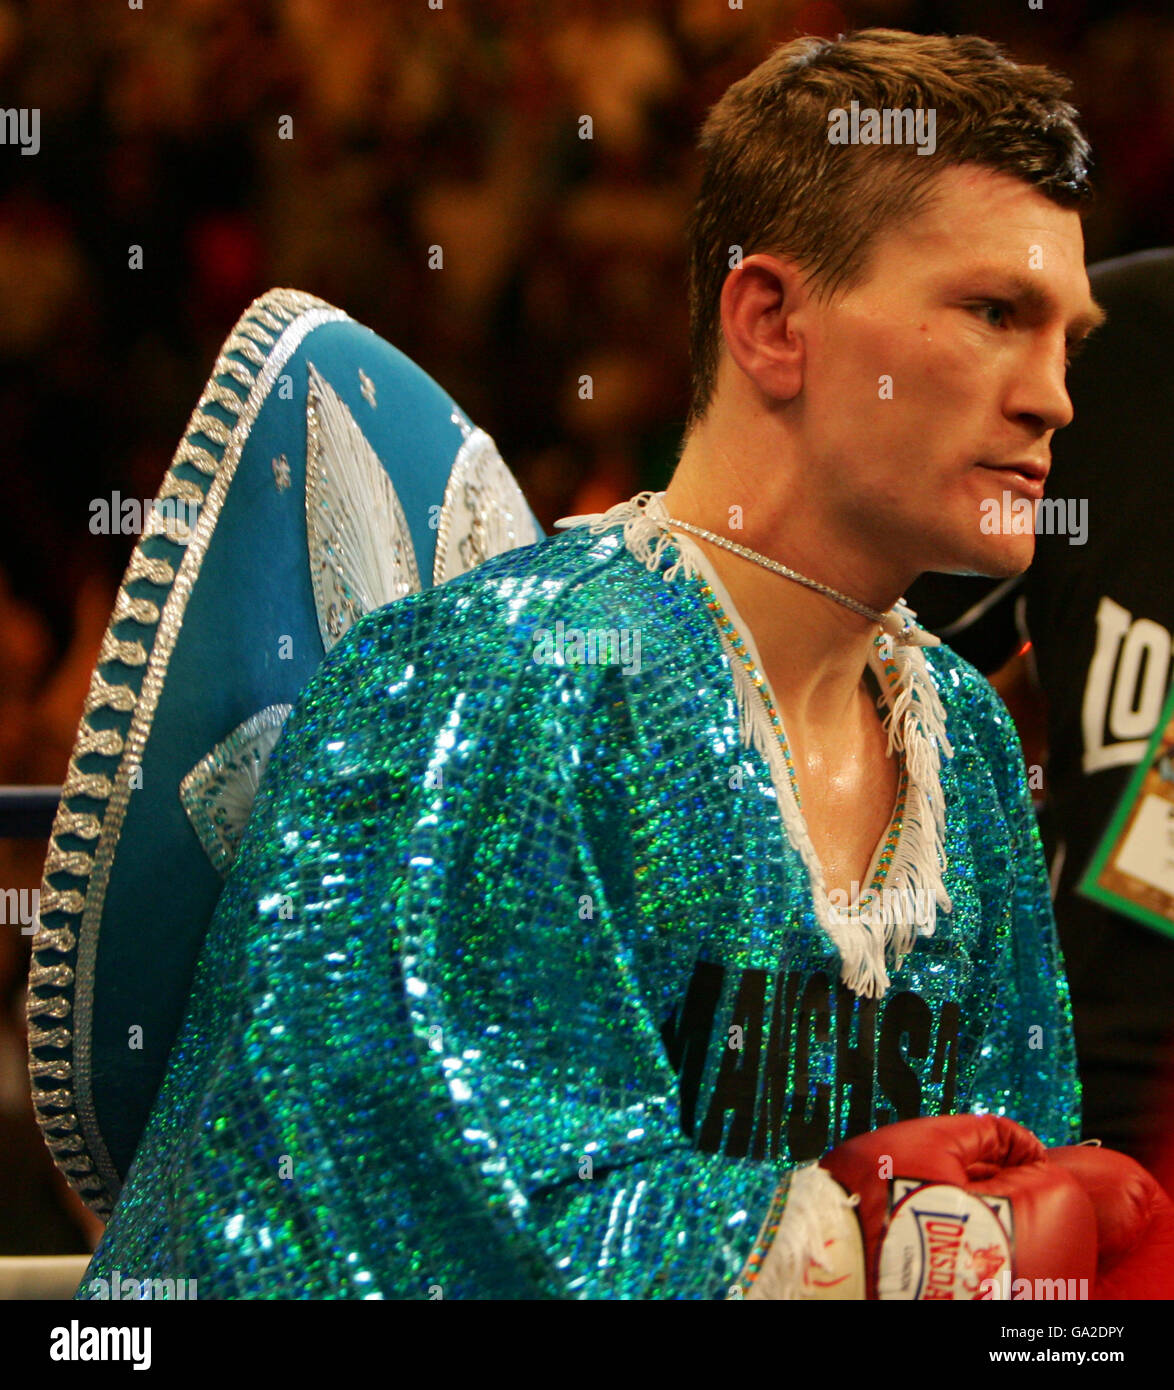 Boxing - Ricky Hatton v Jose Luis Castillo - Light Welterweight - Las Vegas Stock Photo